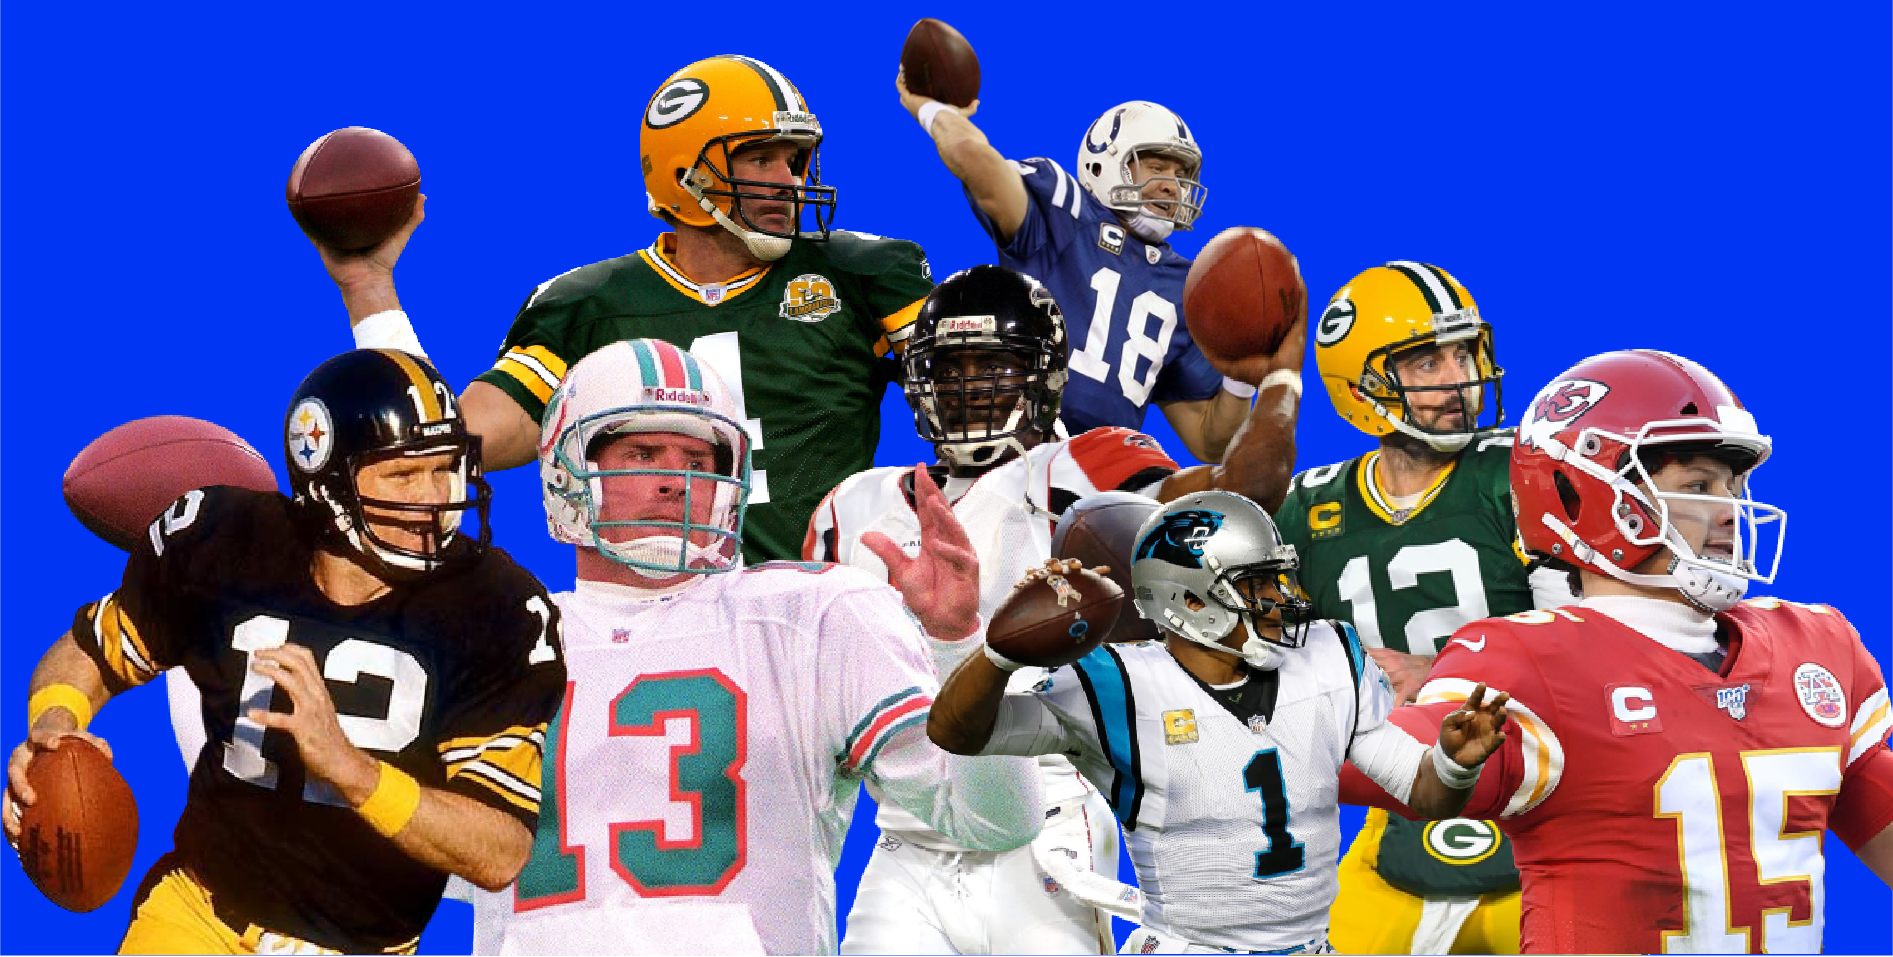 Troy Aikman - Football & Sports Background Wallpapers on Desktop